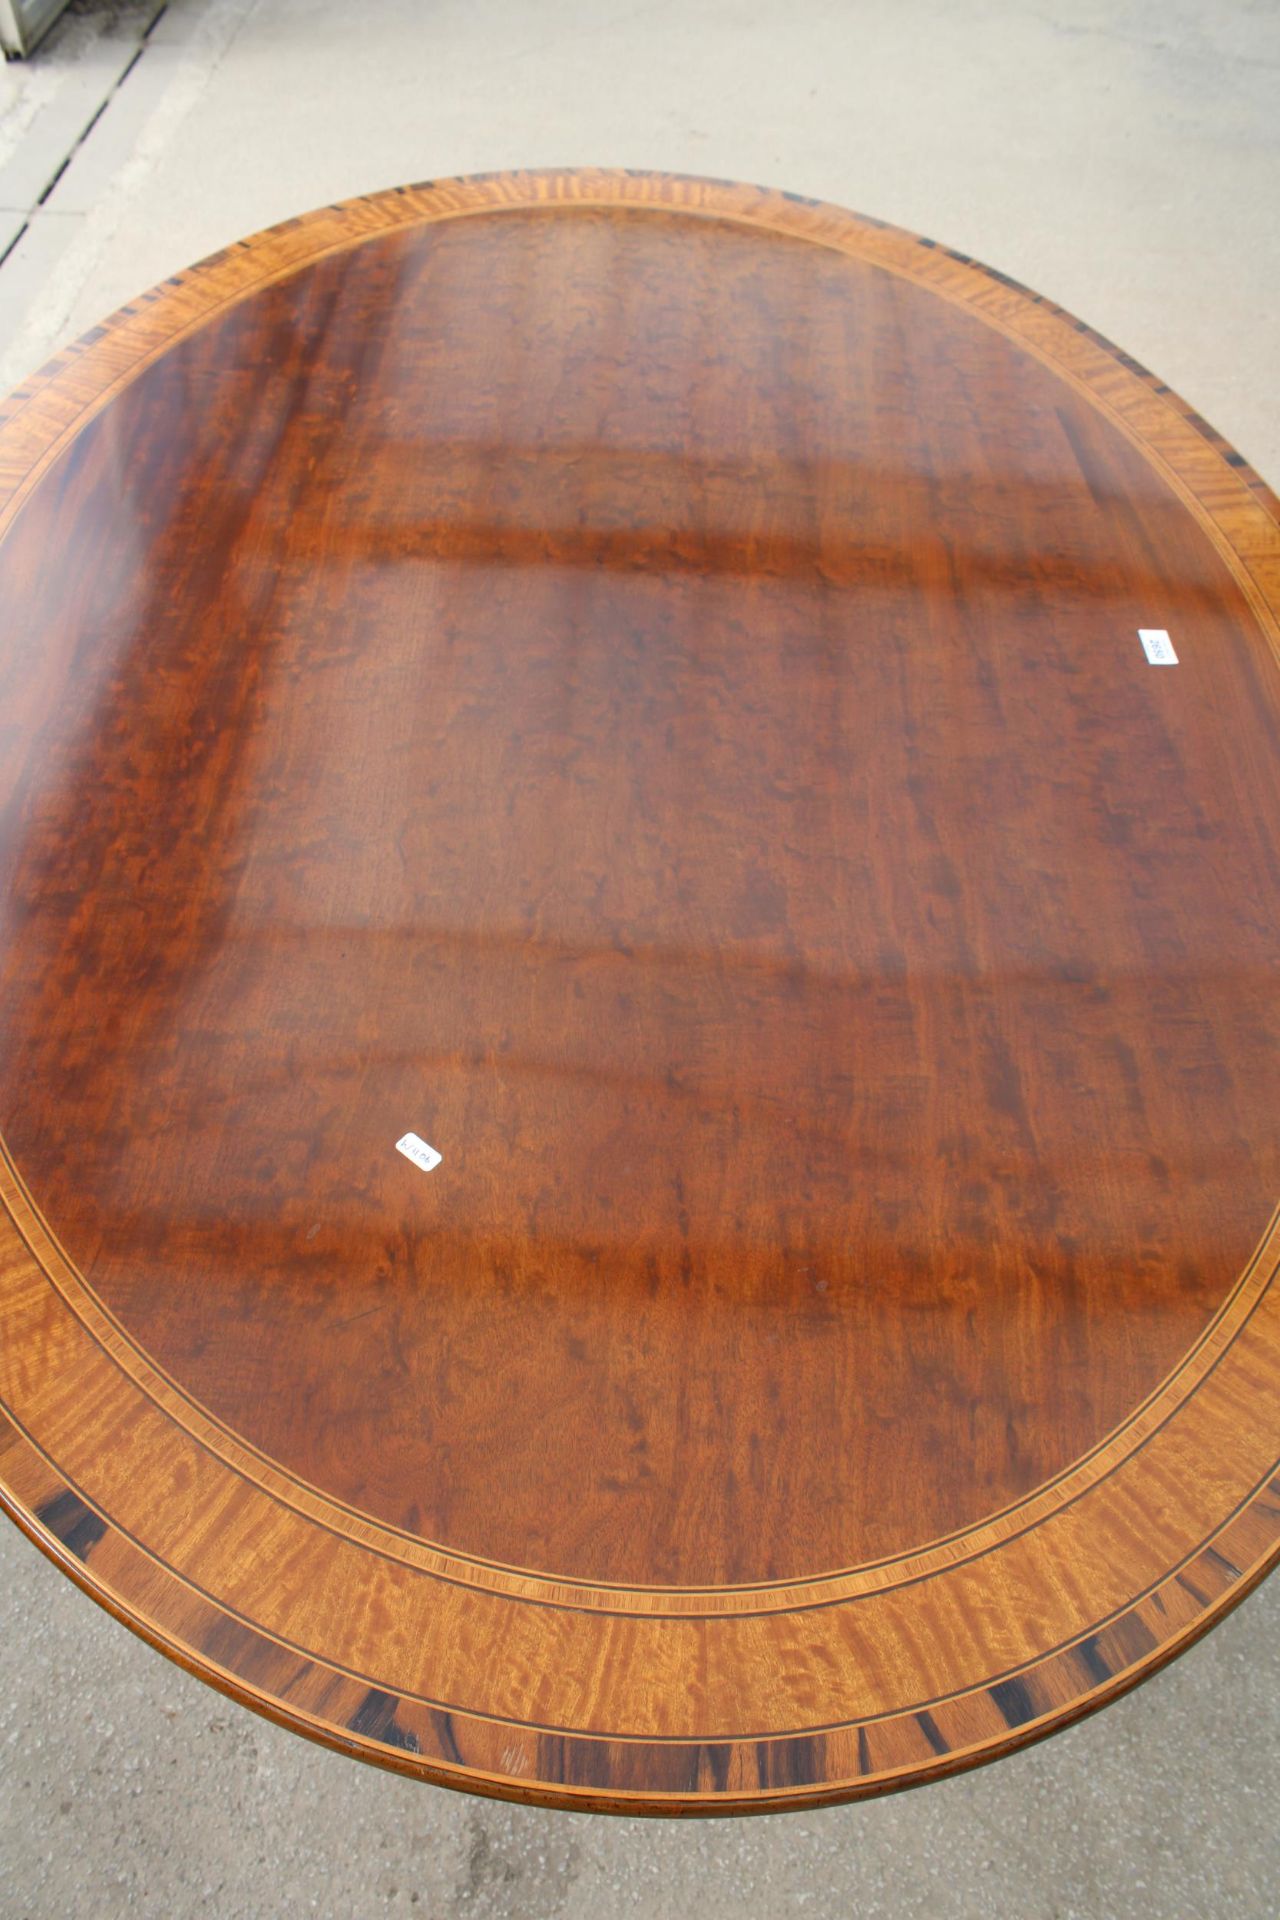 A REGENCY STYLE OVAL MAHOGANY MULTI-CROSSBANDED TILT TOP BREAKFAST TABLE, 61.5" X 45.5" - Image 6 of 8